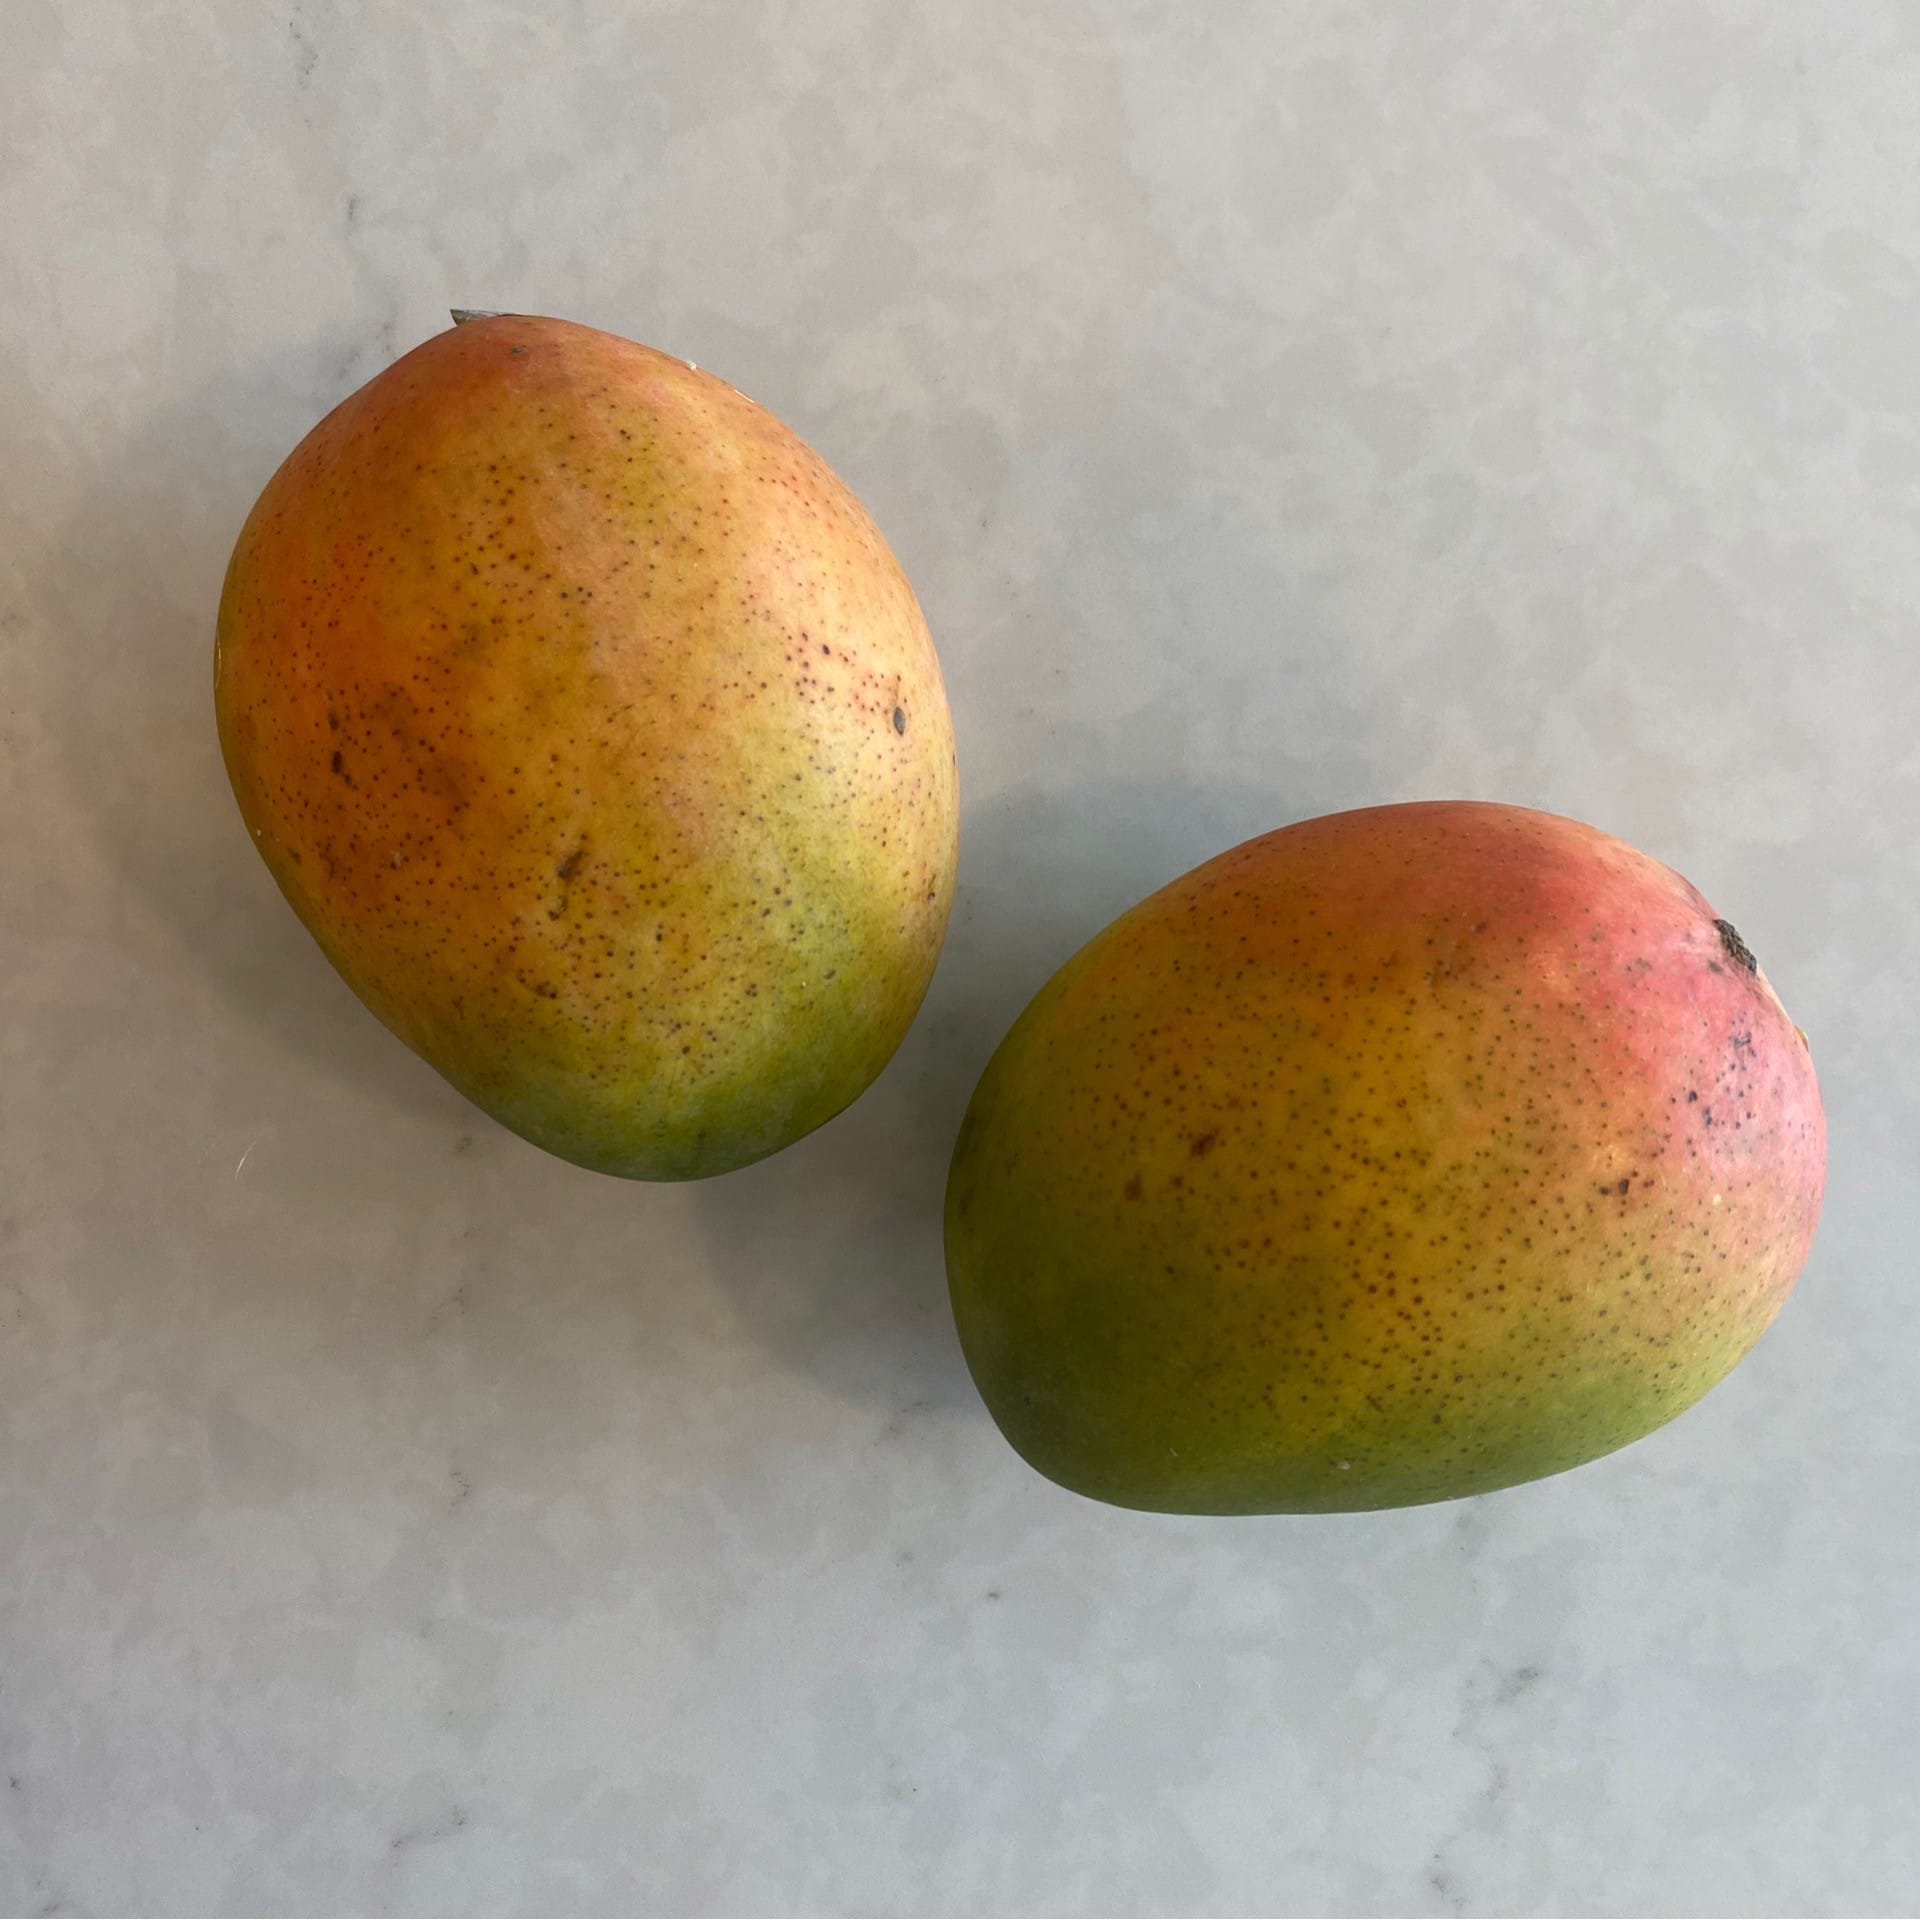 mangoes keitt variety 25 lbs each